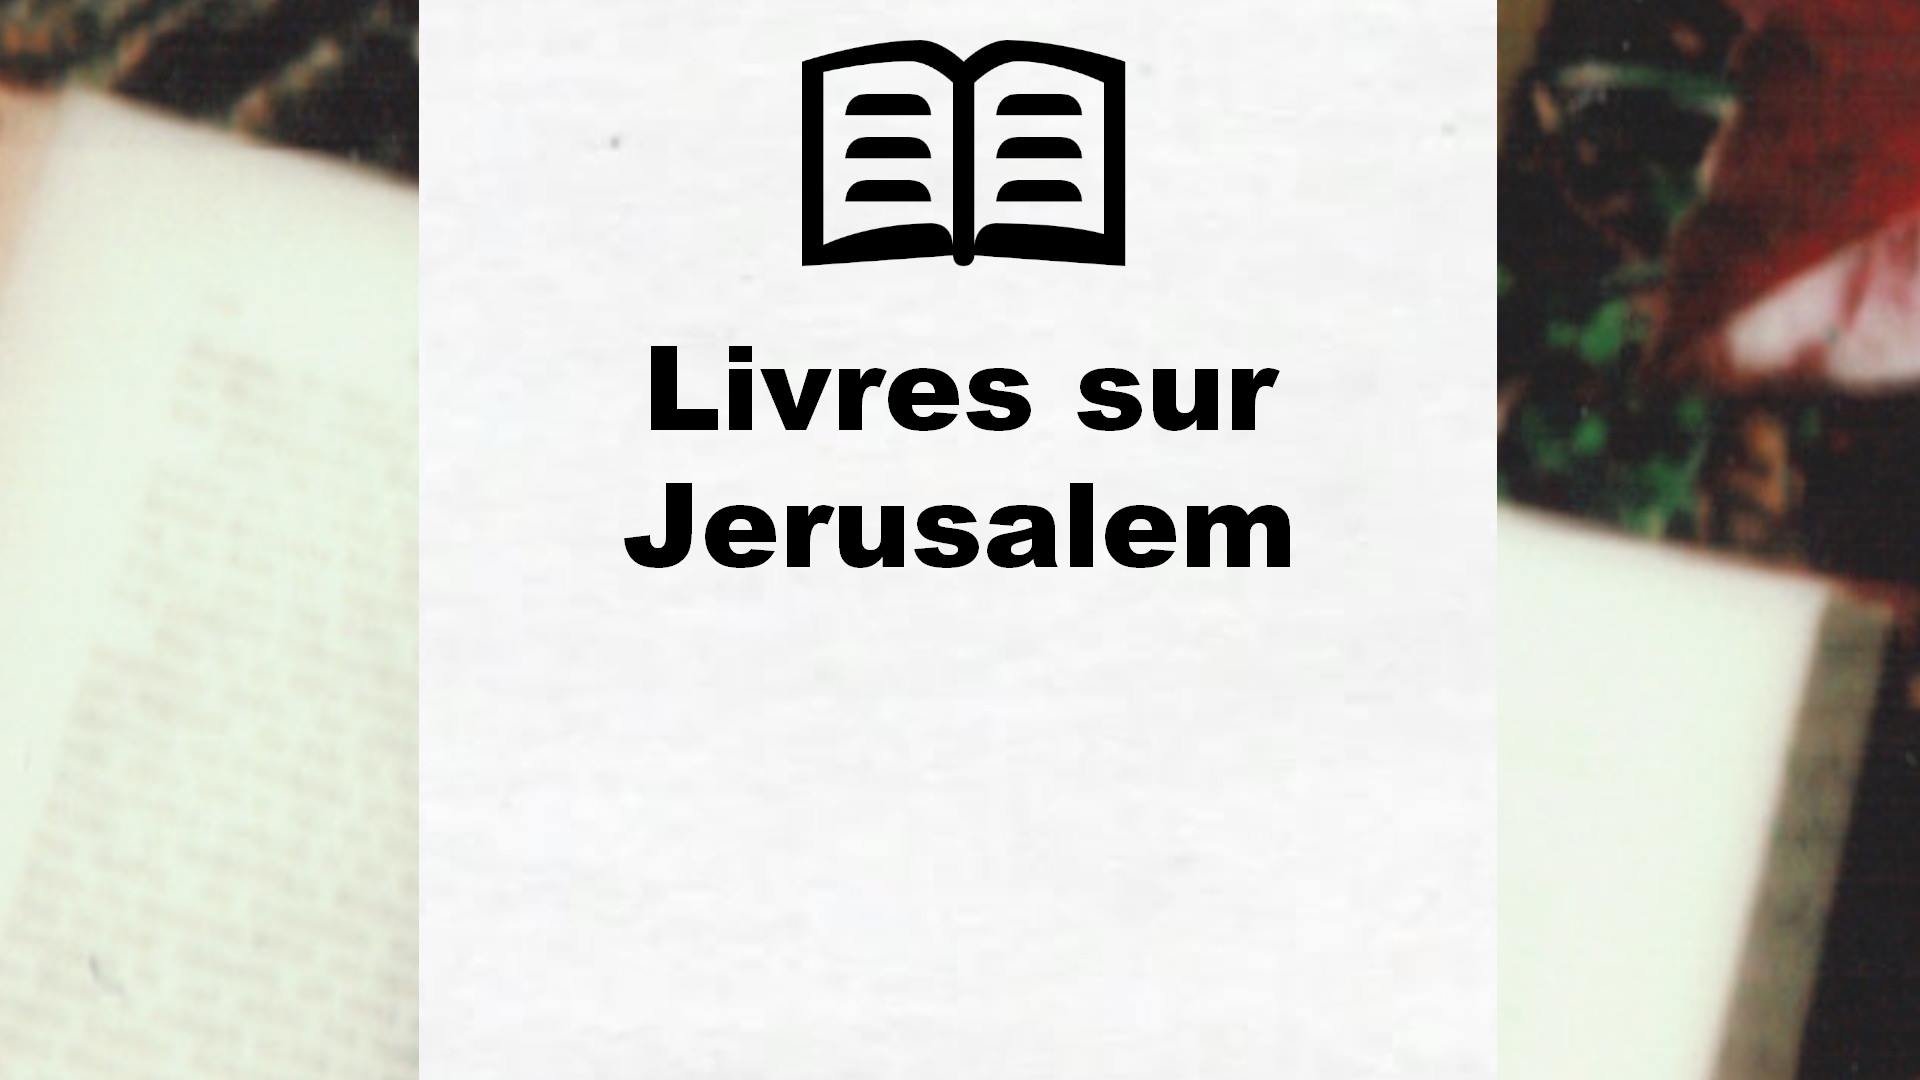 Livres sur Jerusalem